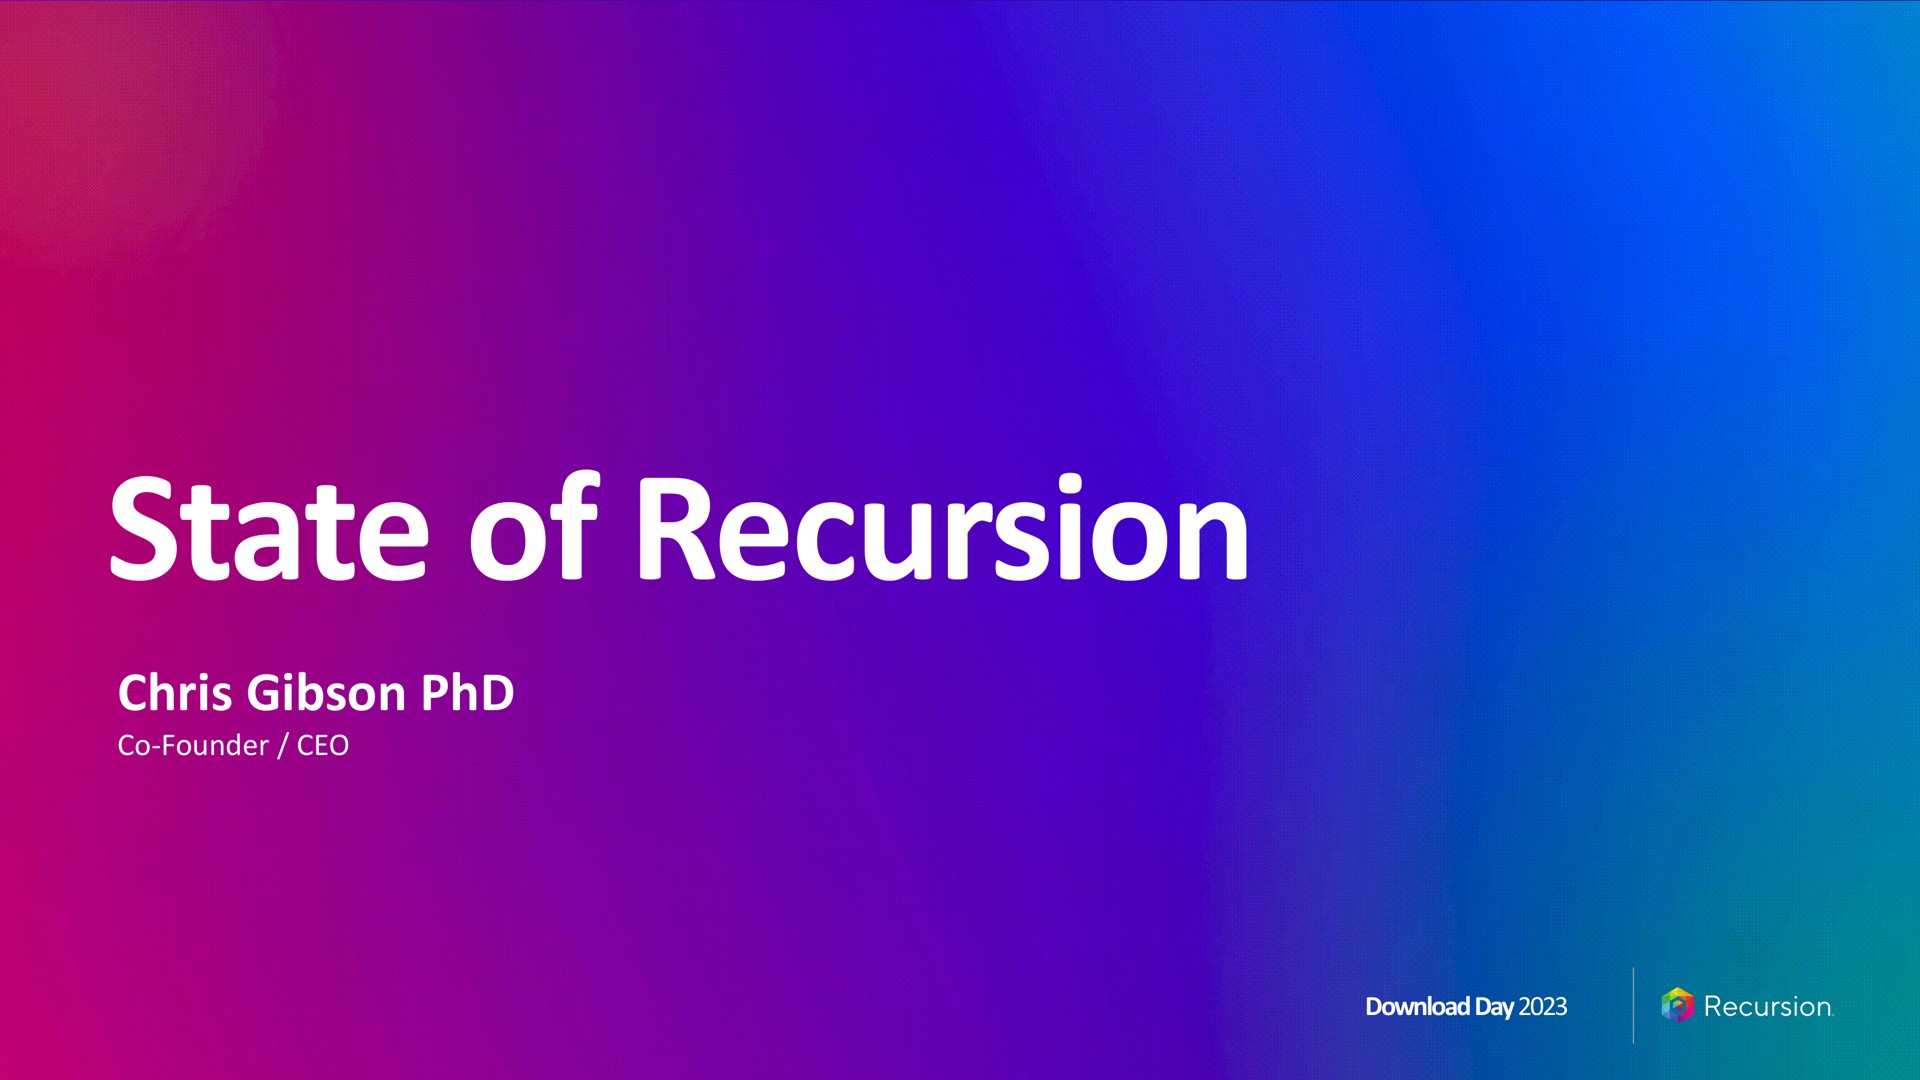 state of recursion founder | Recursion Pharmaceuticals